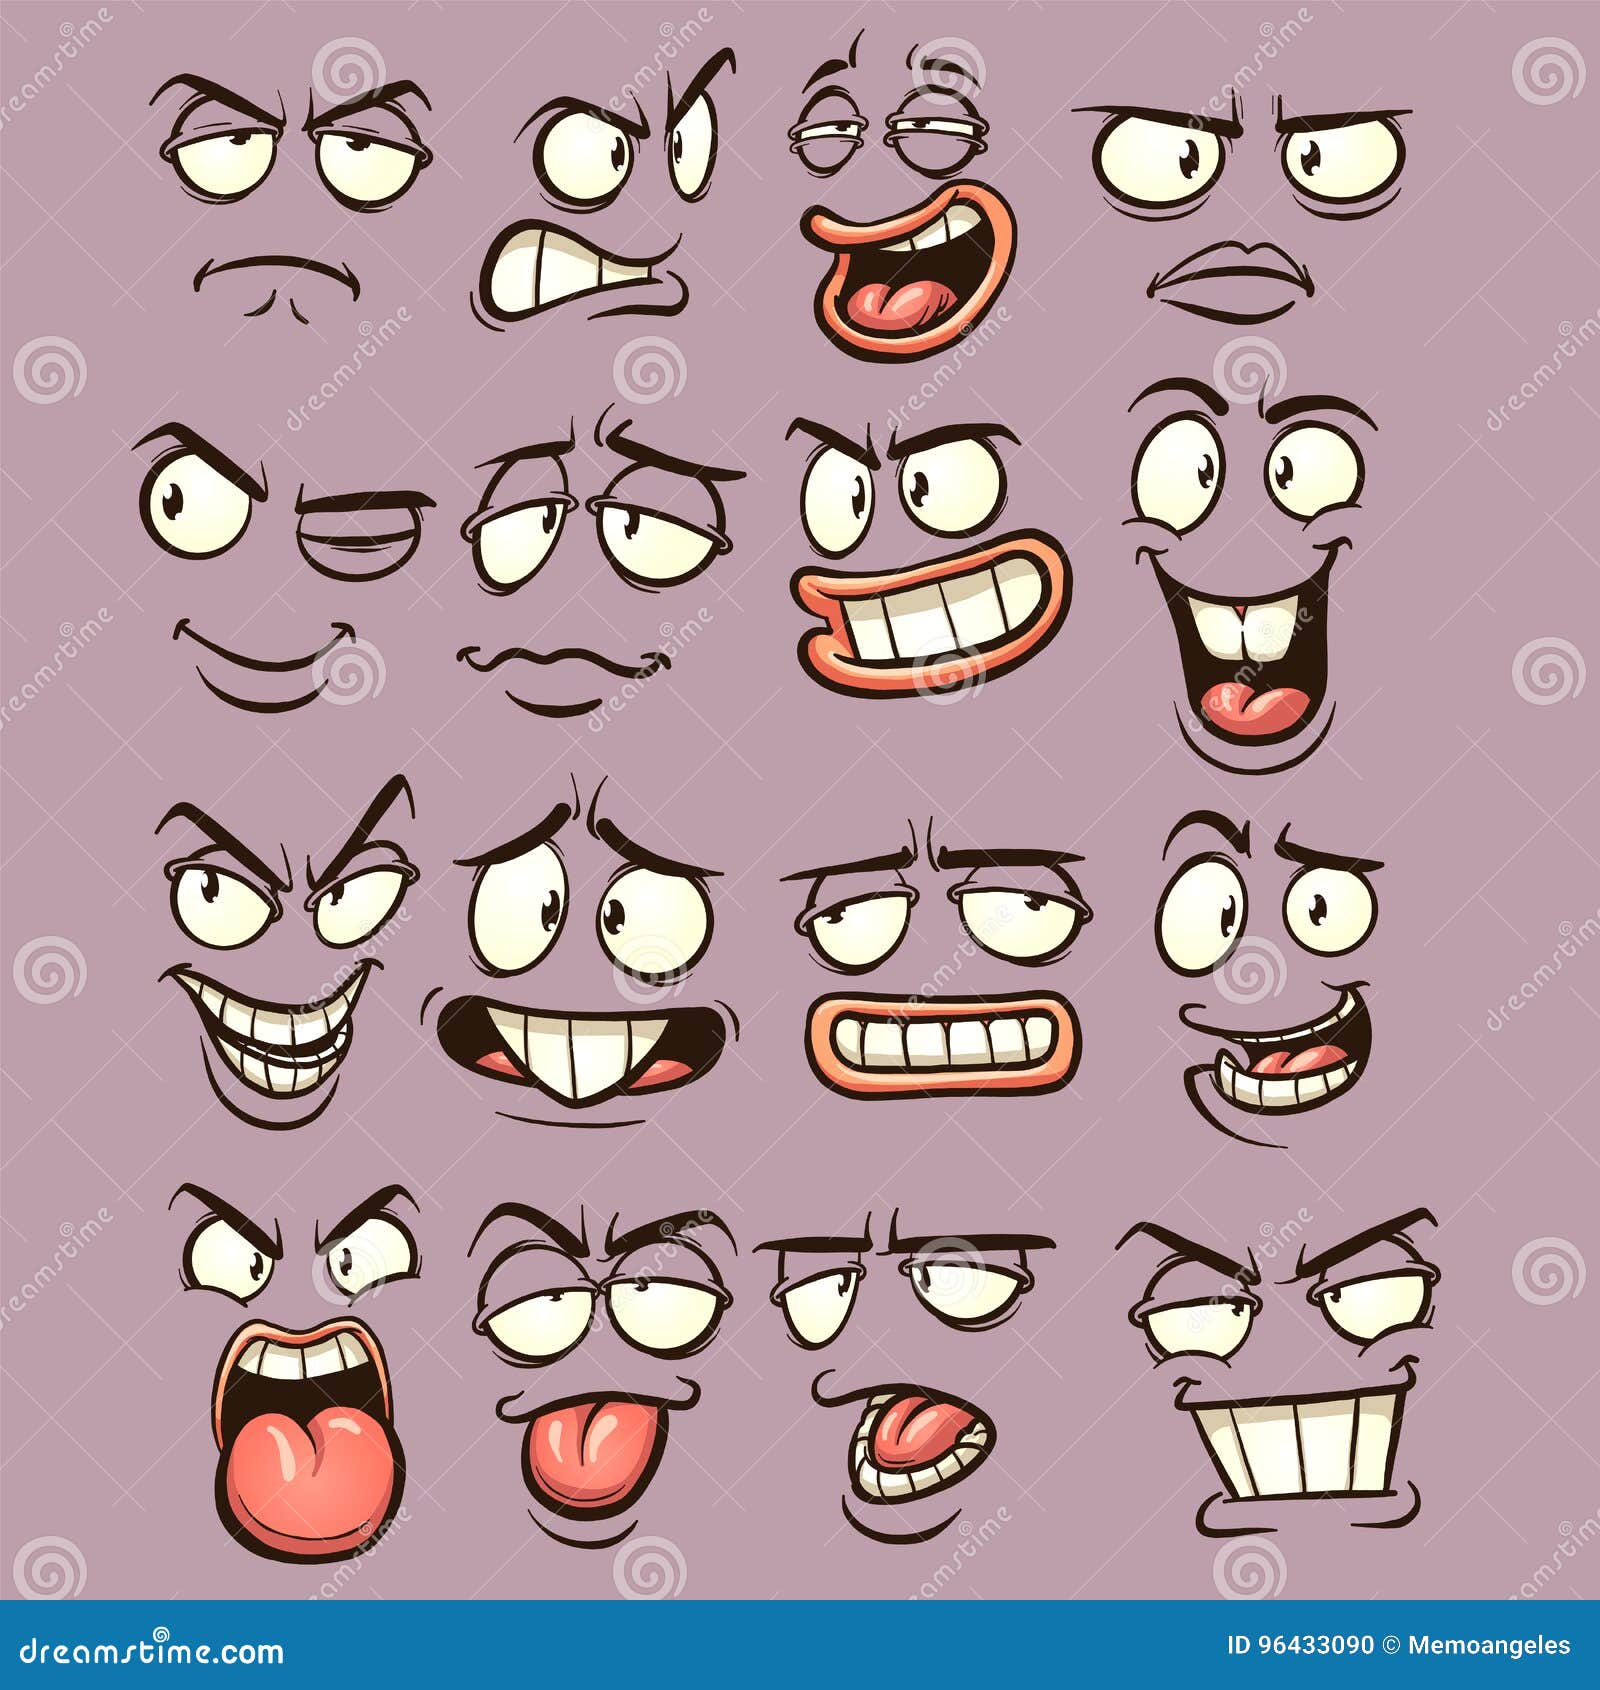 Cartoon faces stock vector. Illustration of tongue, emoji - 96433090